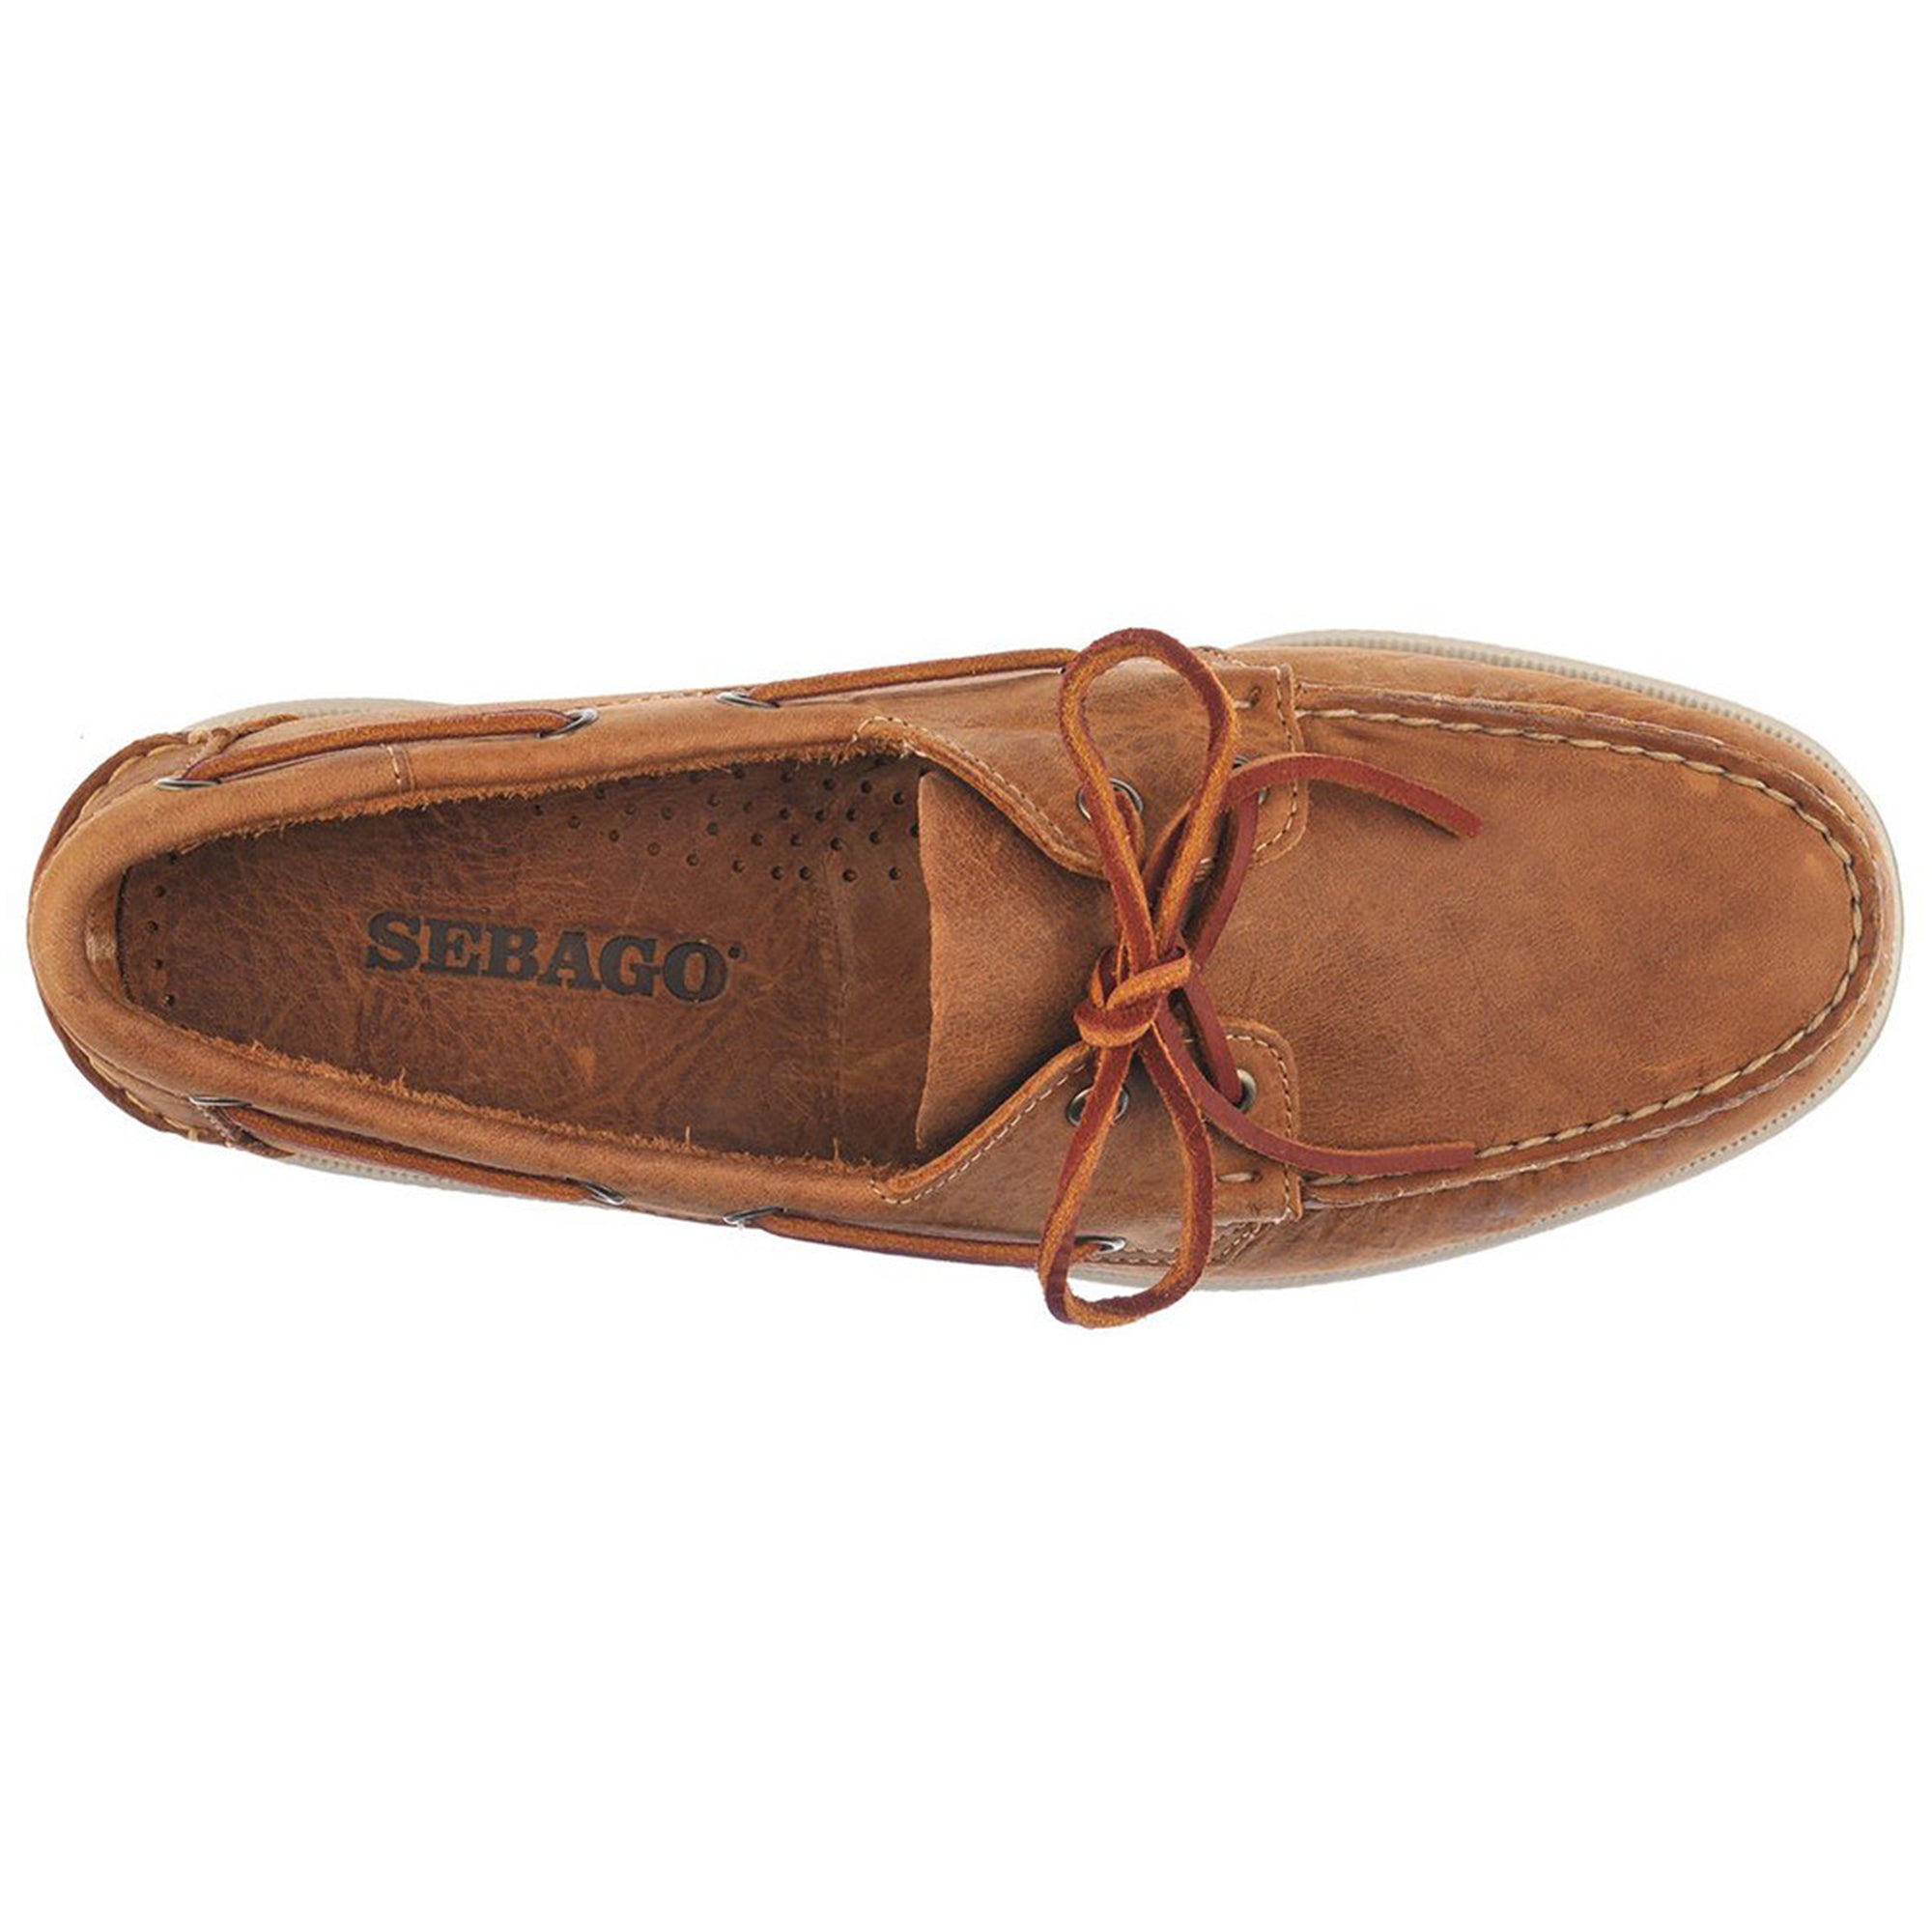 Sebago Docksides Portland Crazy Horse Leather Shoes - Tan